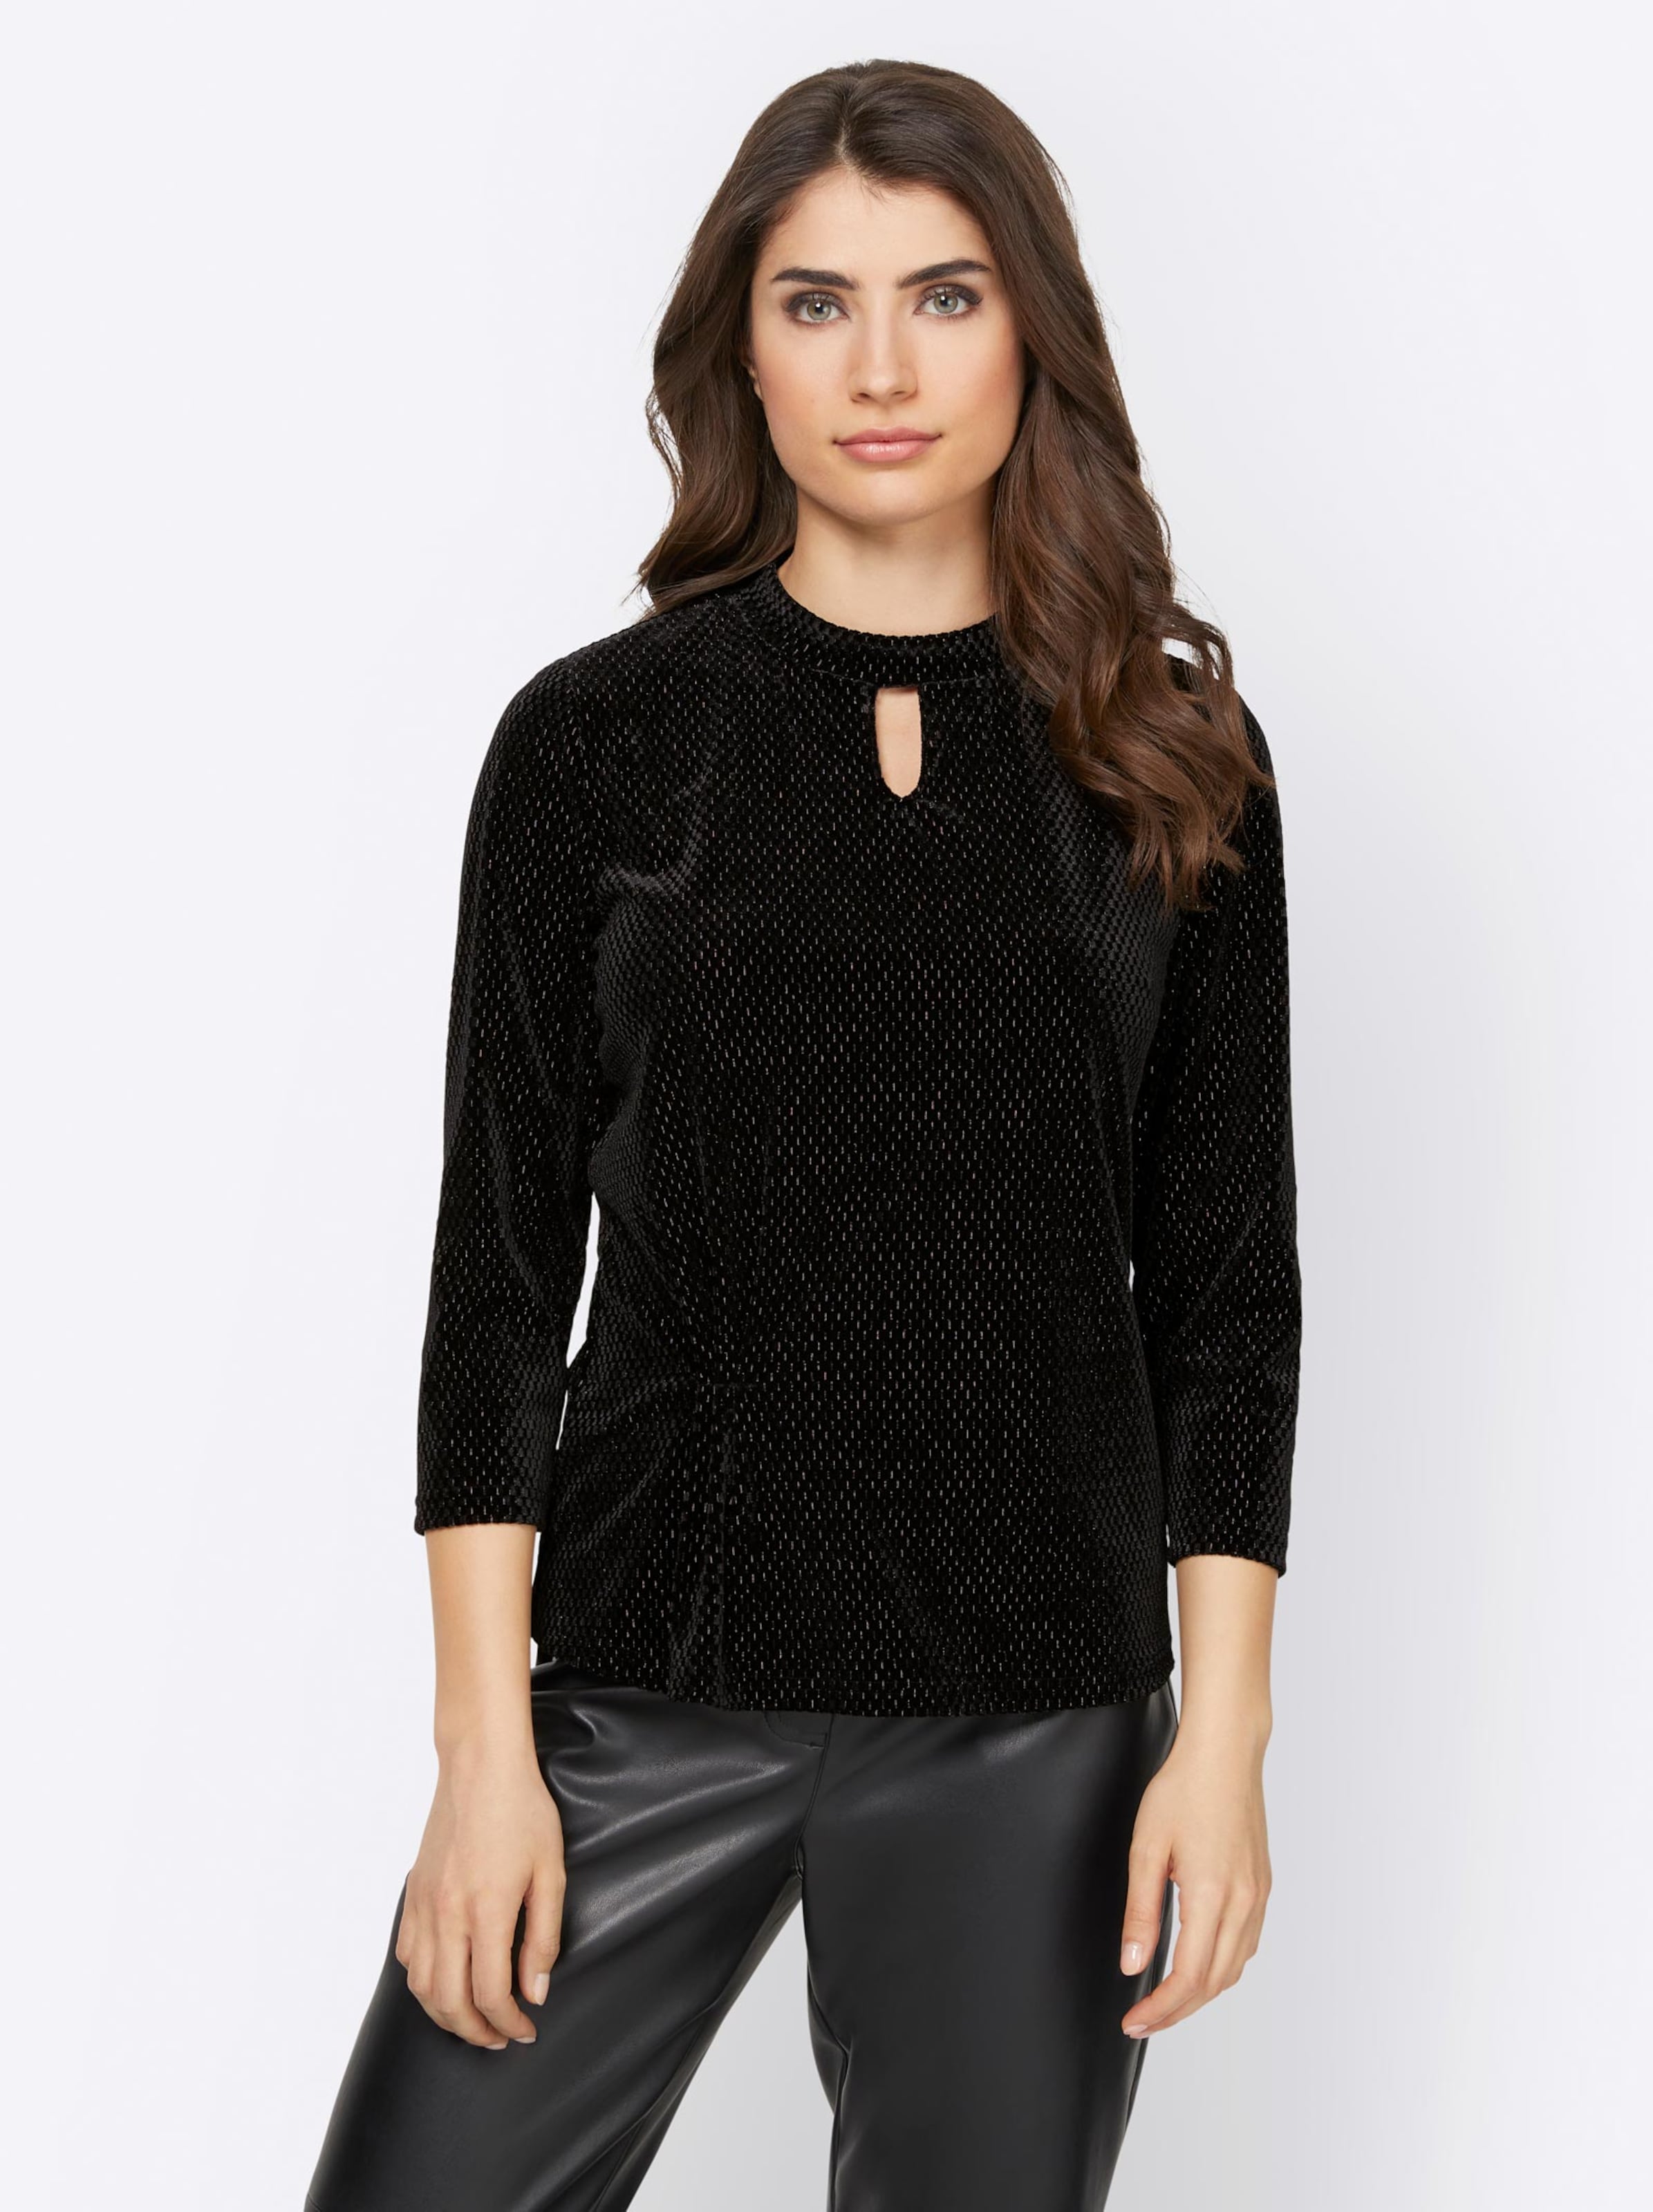 Damenmode Shirts Ashley Brooke Samt-Shirt in schwarz-gemustert 